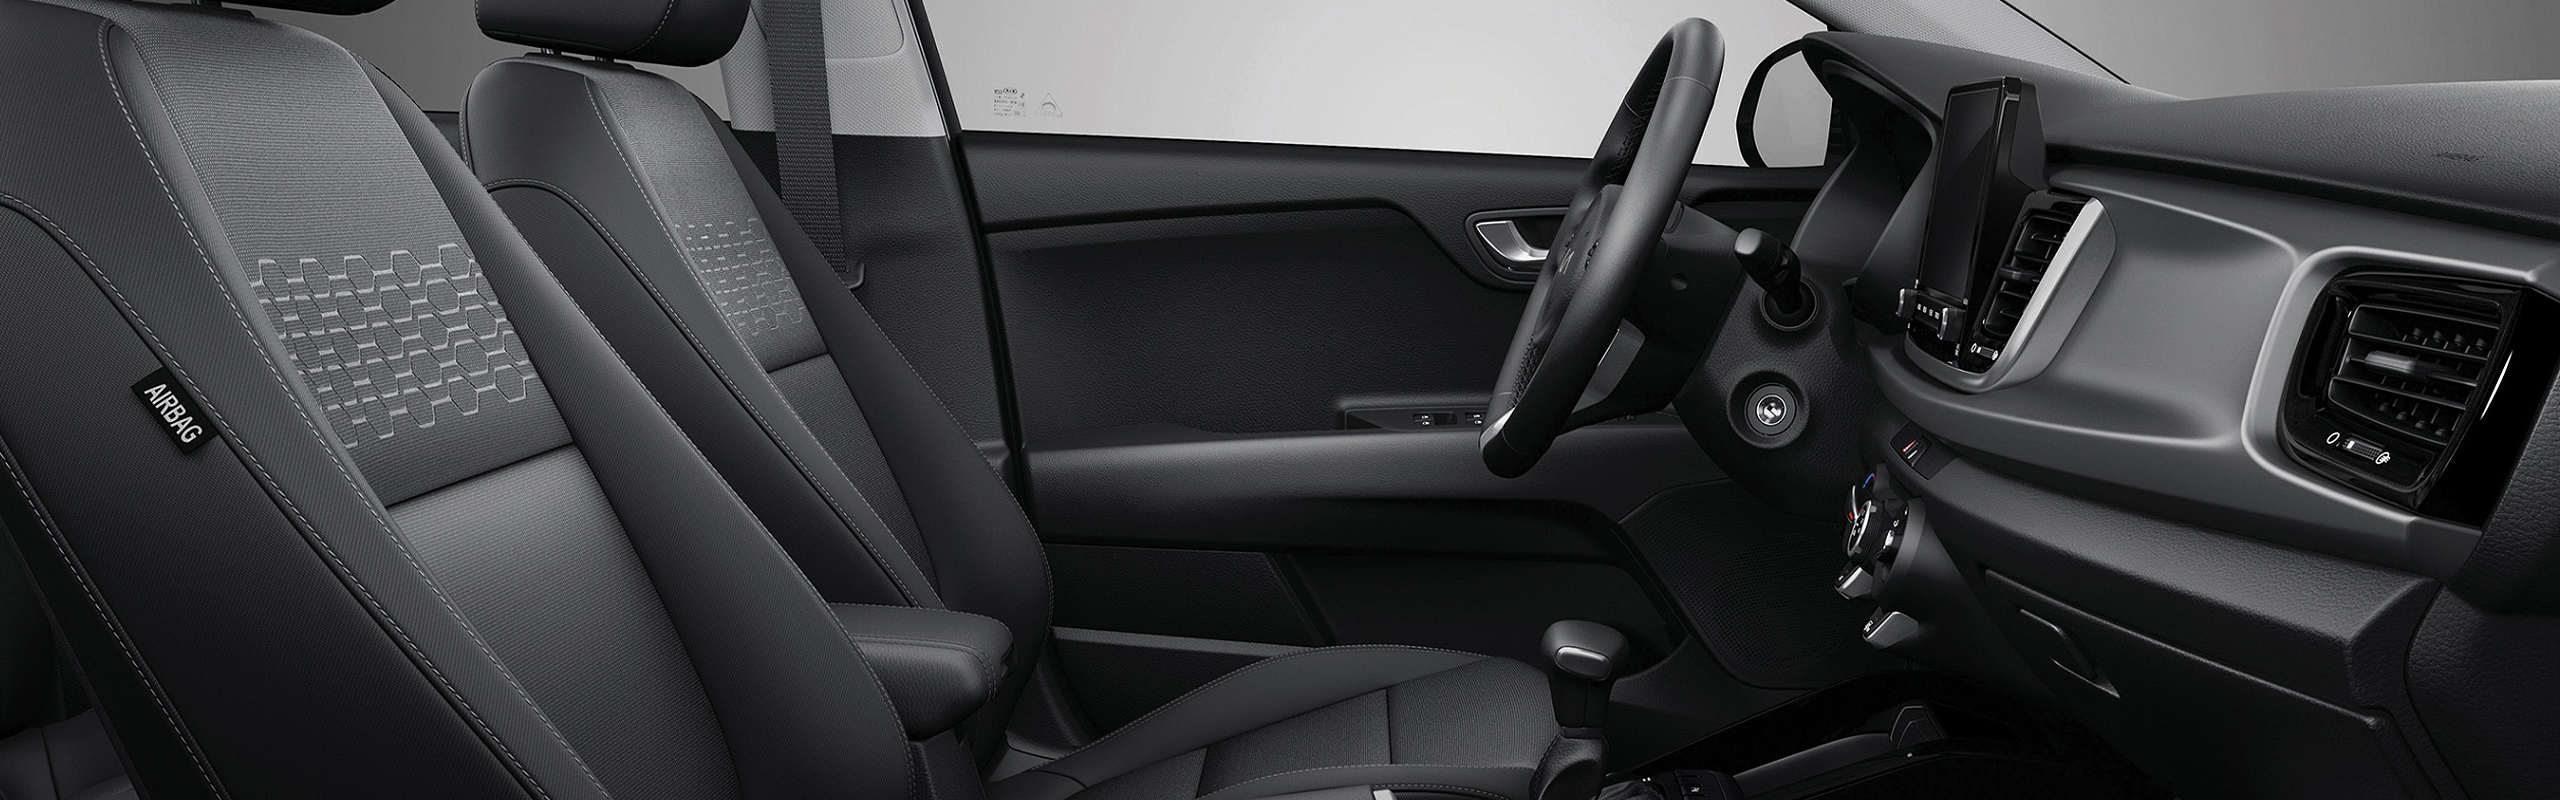 2023 Kia Rio 5-Door | Sporty Hatchback - Pricing & Features | Kia